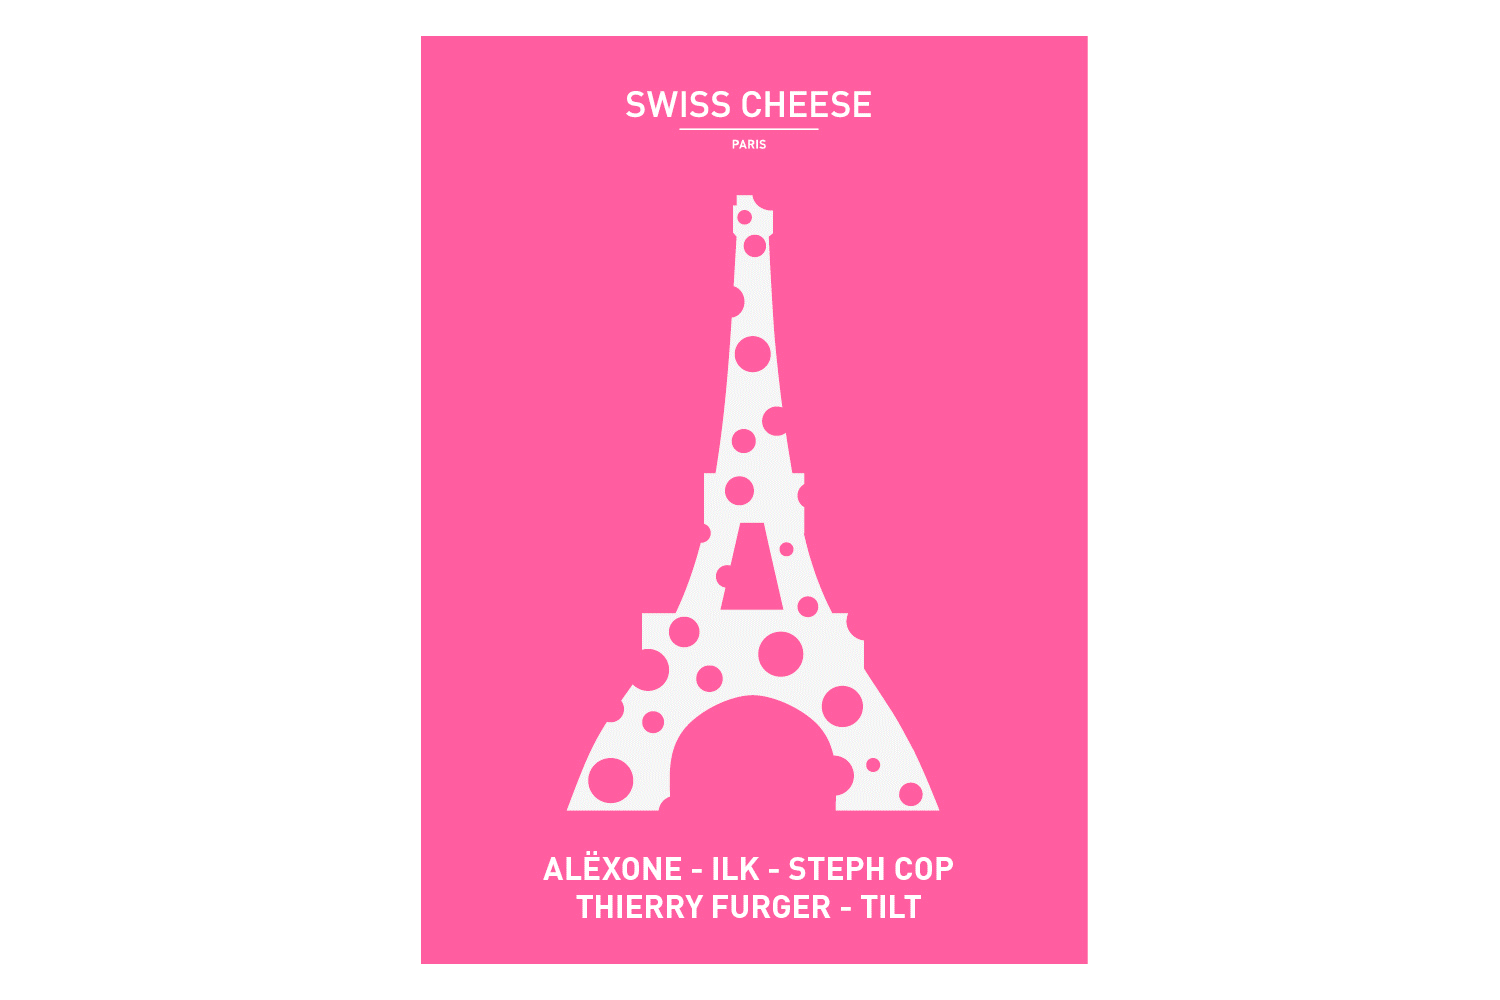 Swiss Cheese in Paris